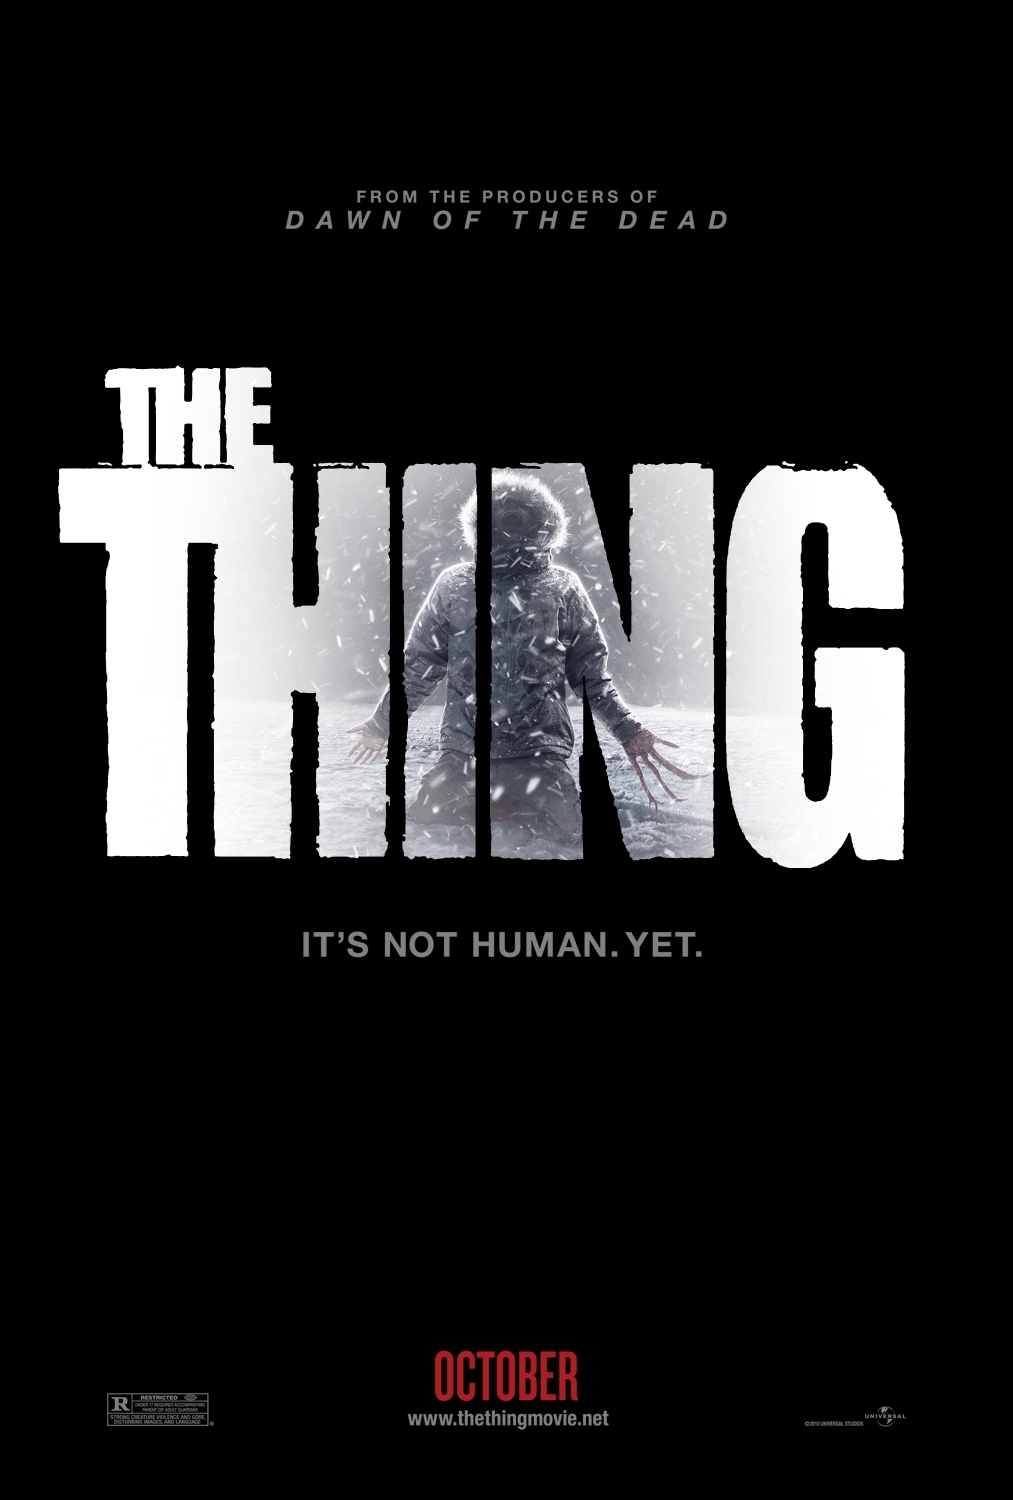 FULL MOVIE: The Thing (2011)